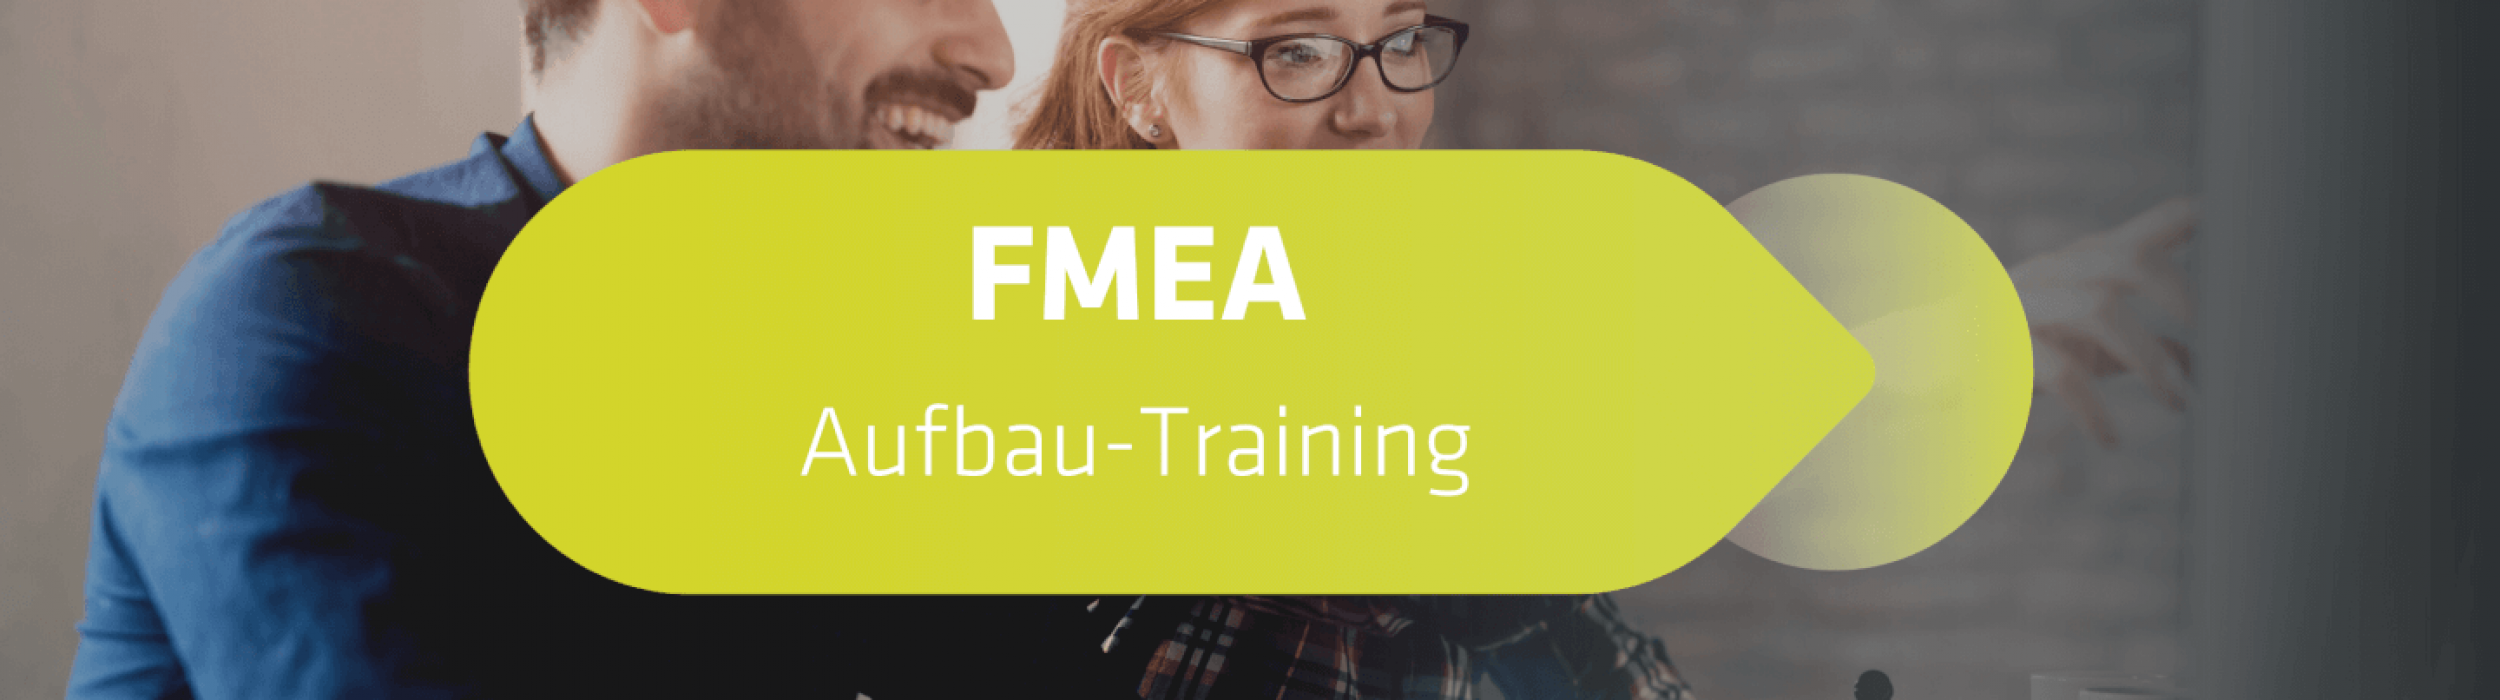 FMEA Aufbau-Training